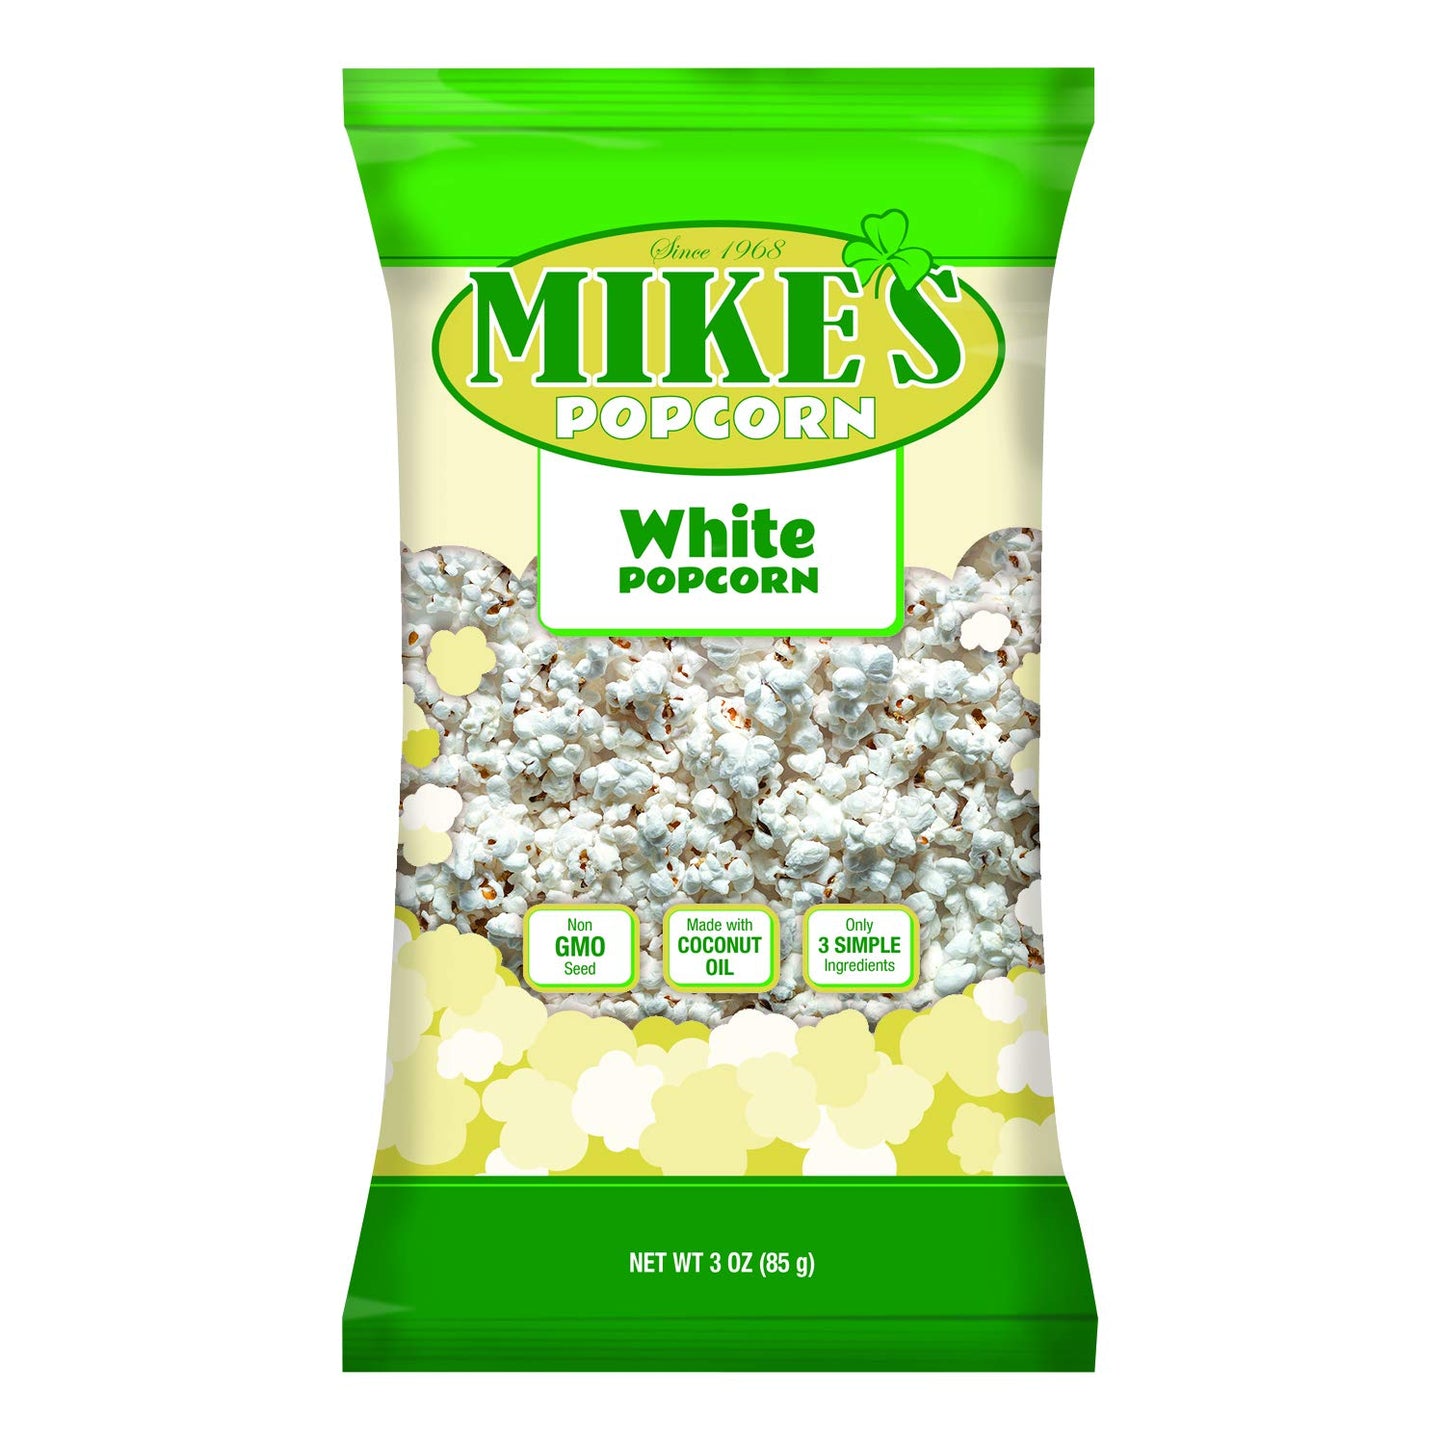 Mike's Popcorn White Popcorn, 3 Ounce